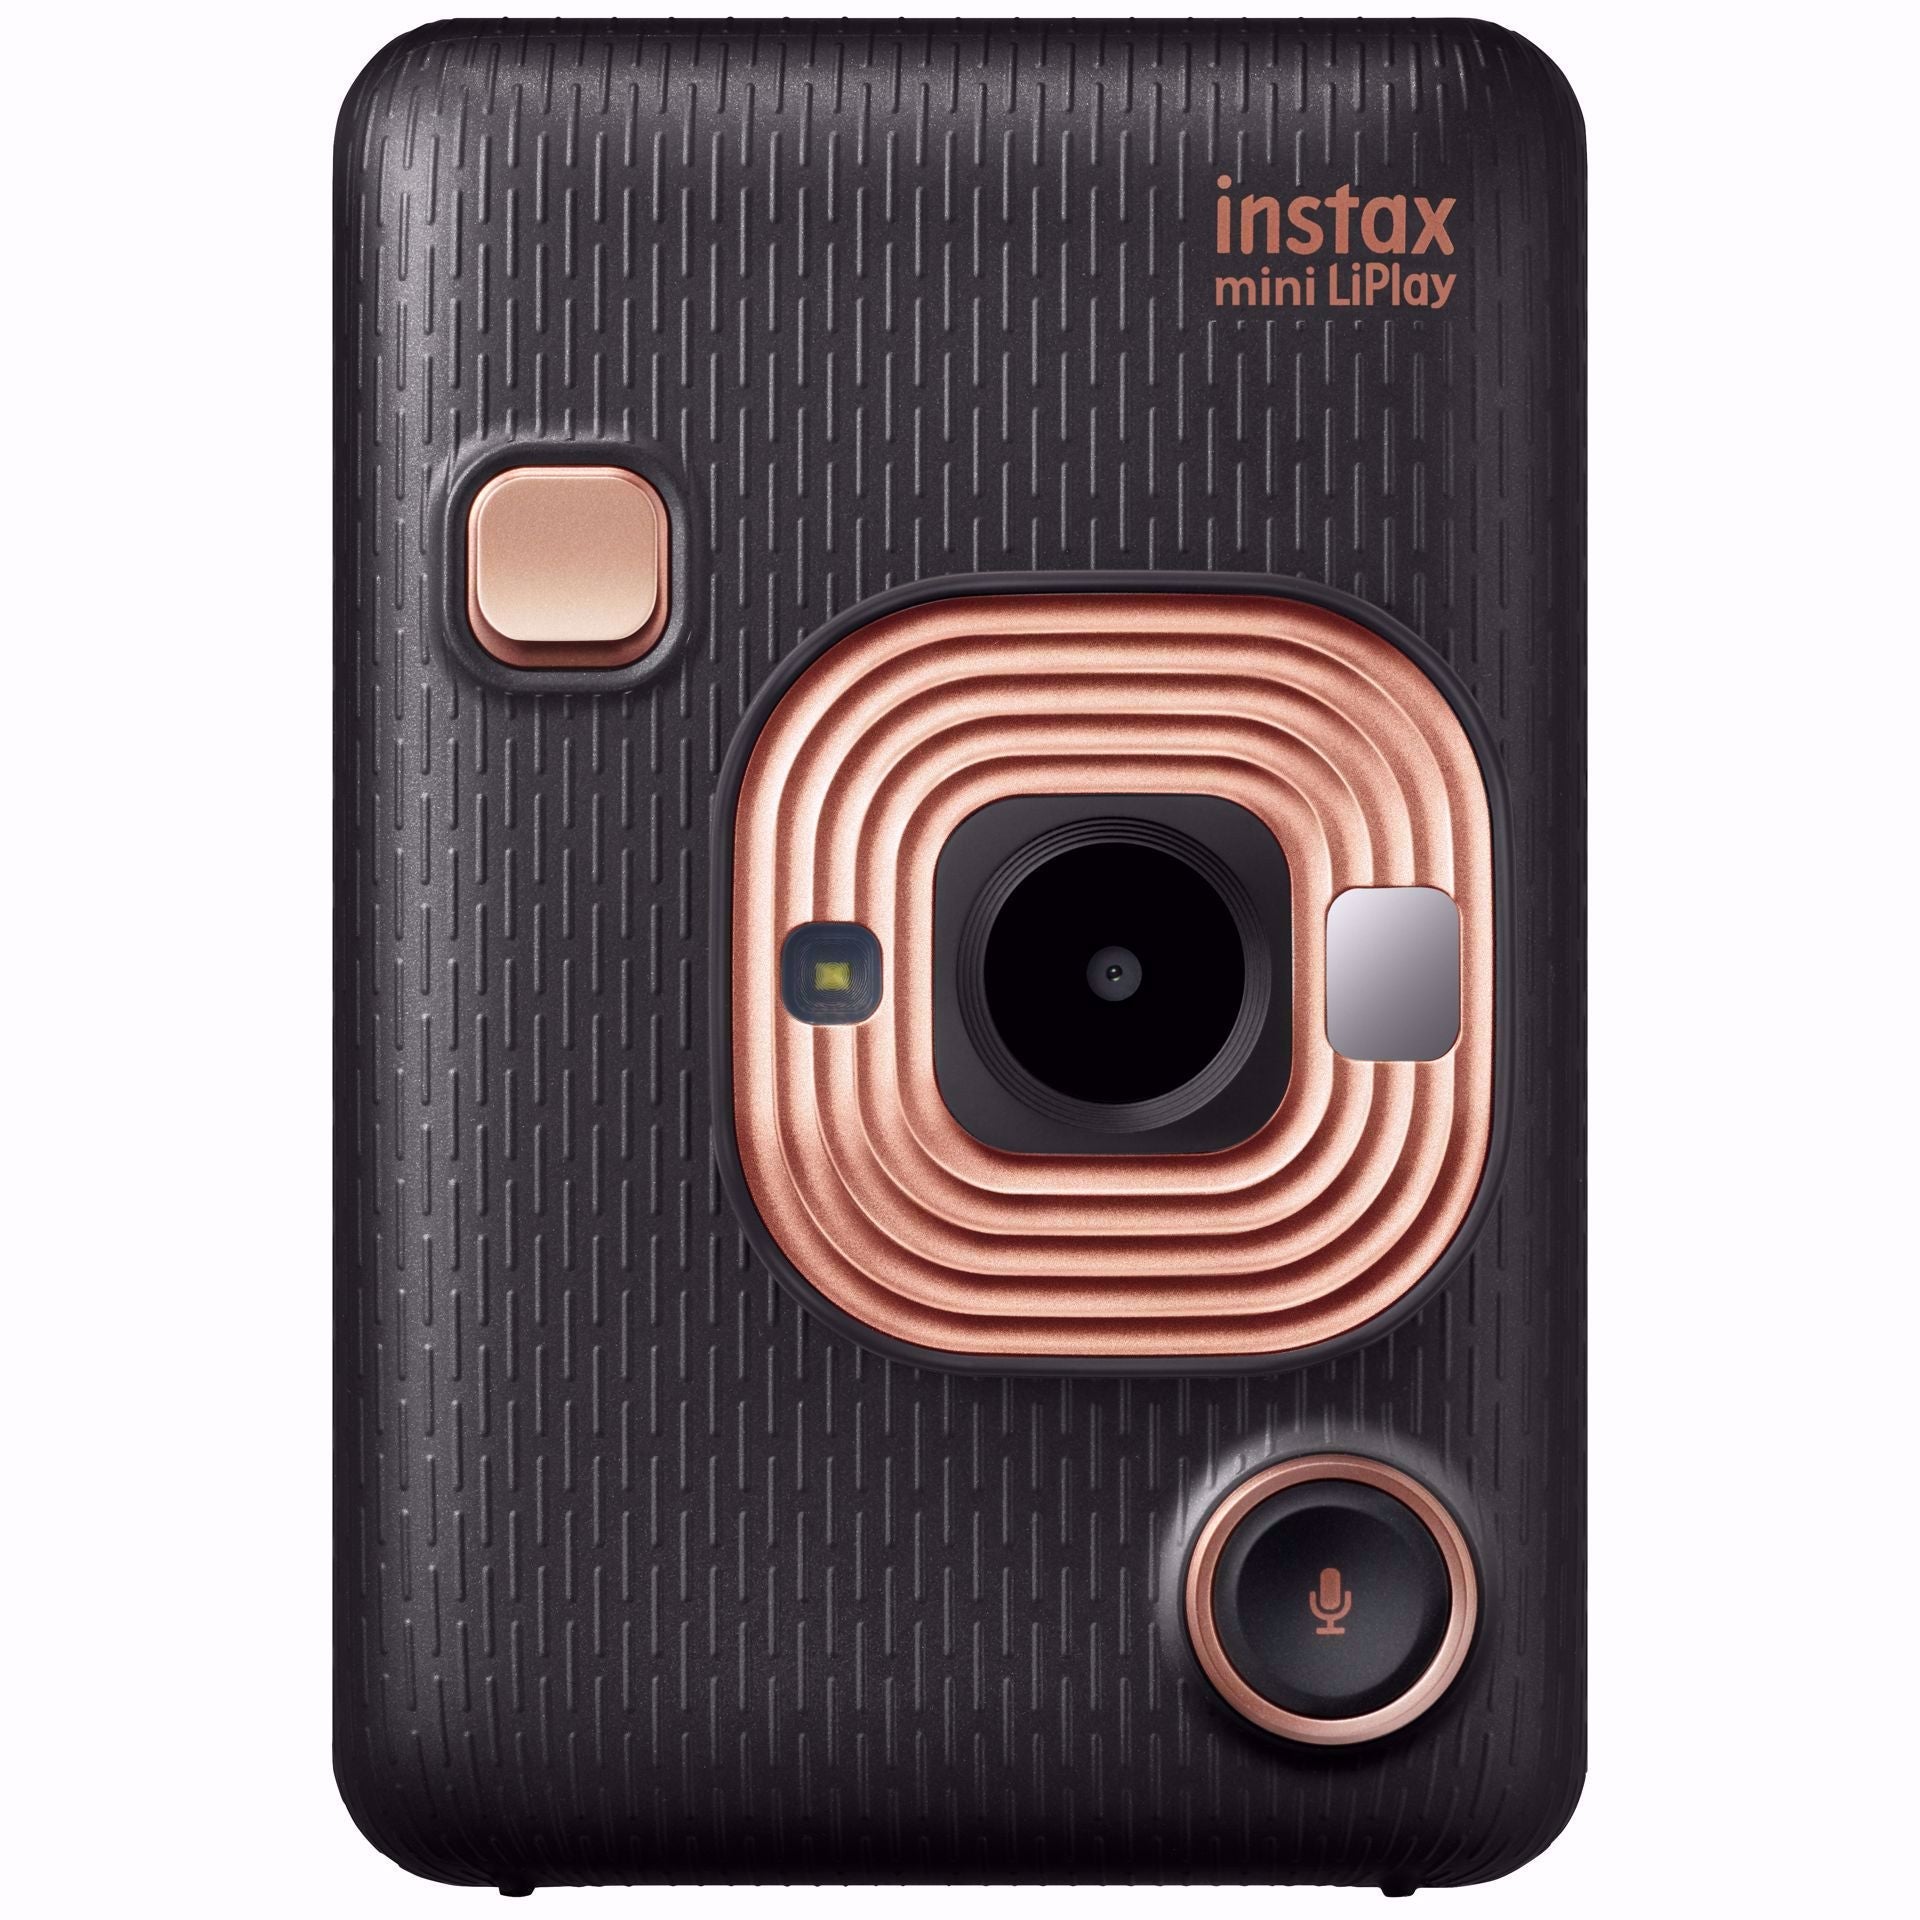 Fujifilm Instax Mini LiPlay Instant camera Fujifilm